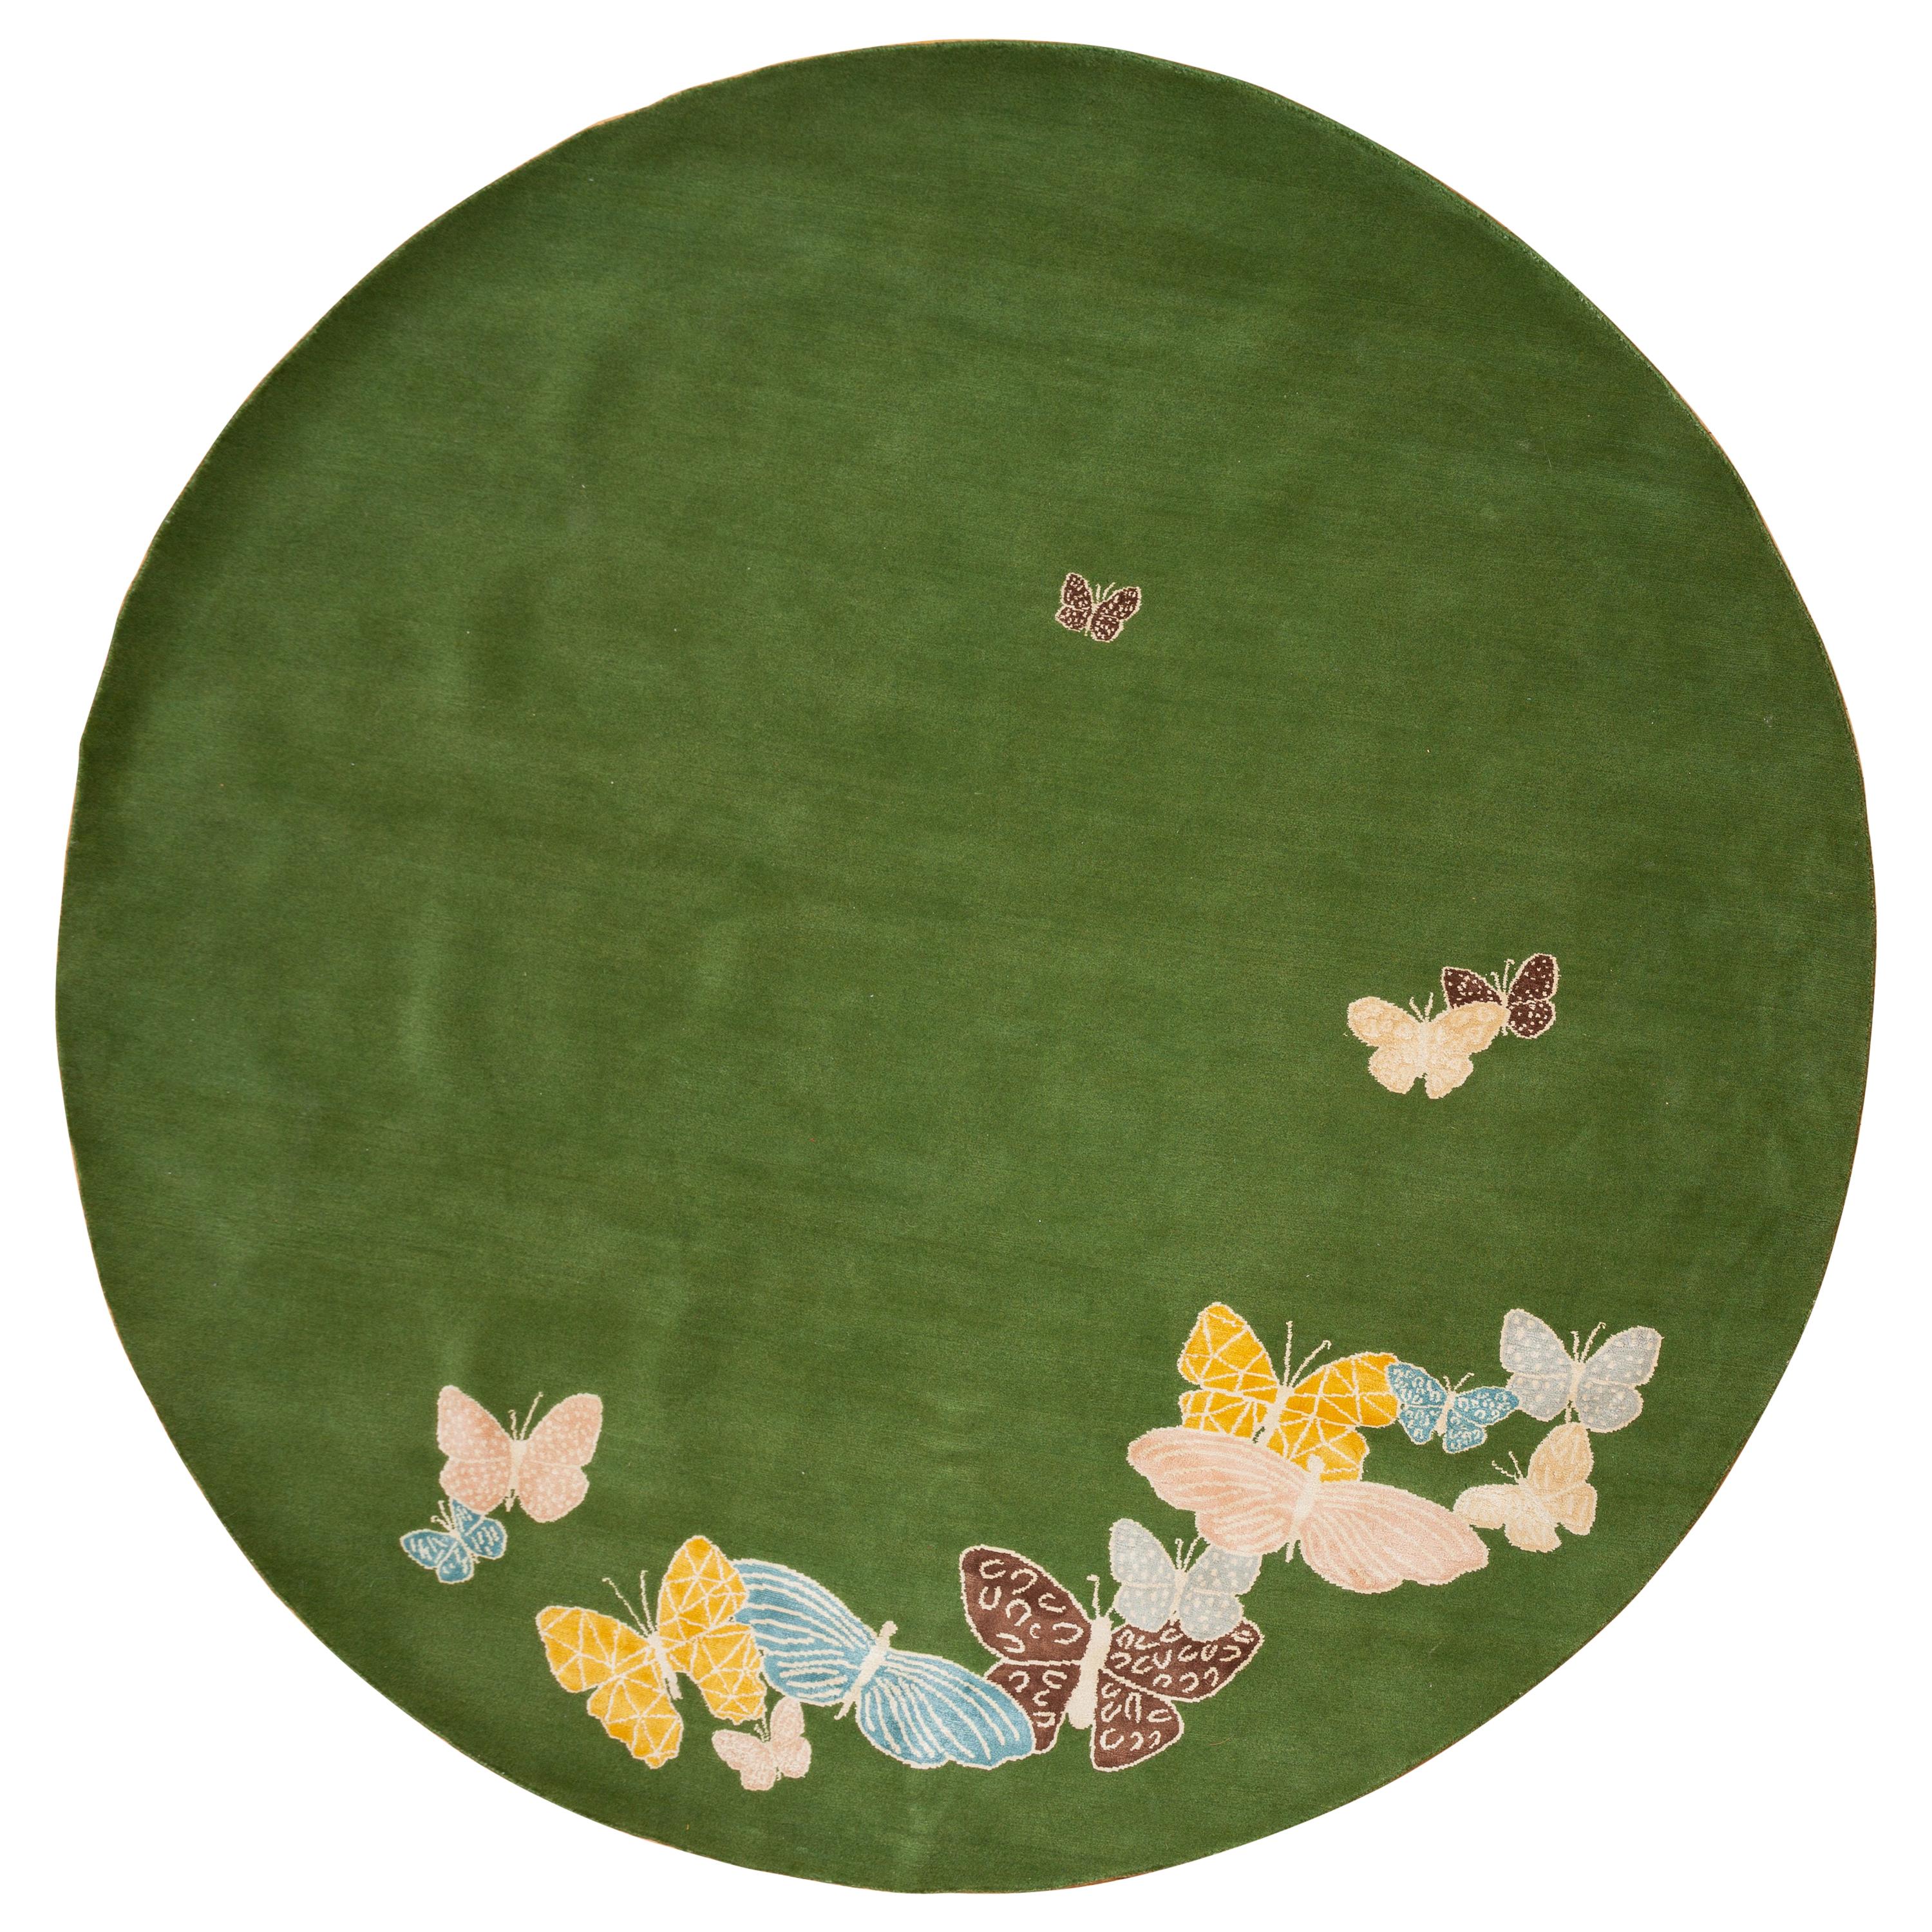 Round Butterfly Rug: Green, Blue, Pink, Orange. Wool and Silk fibers handmade